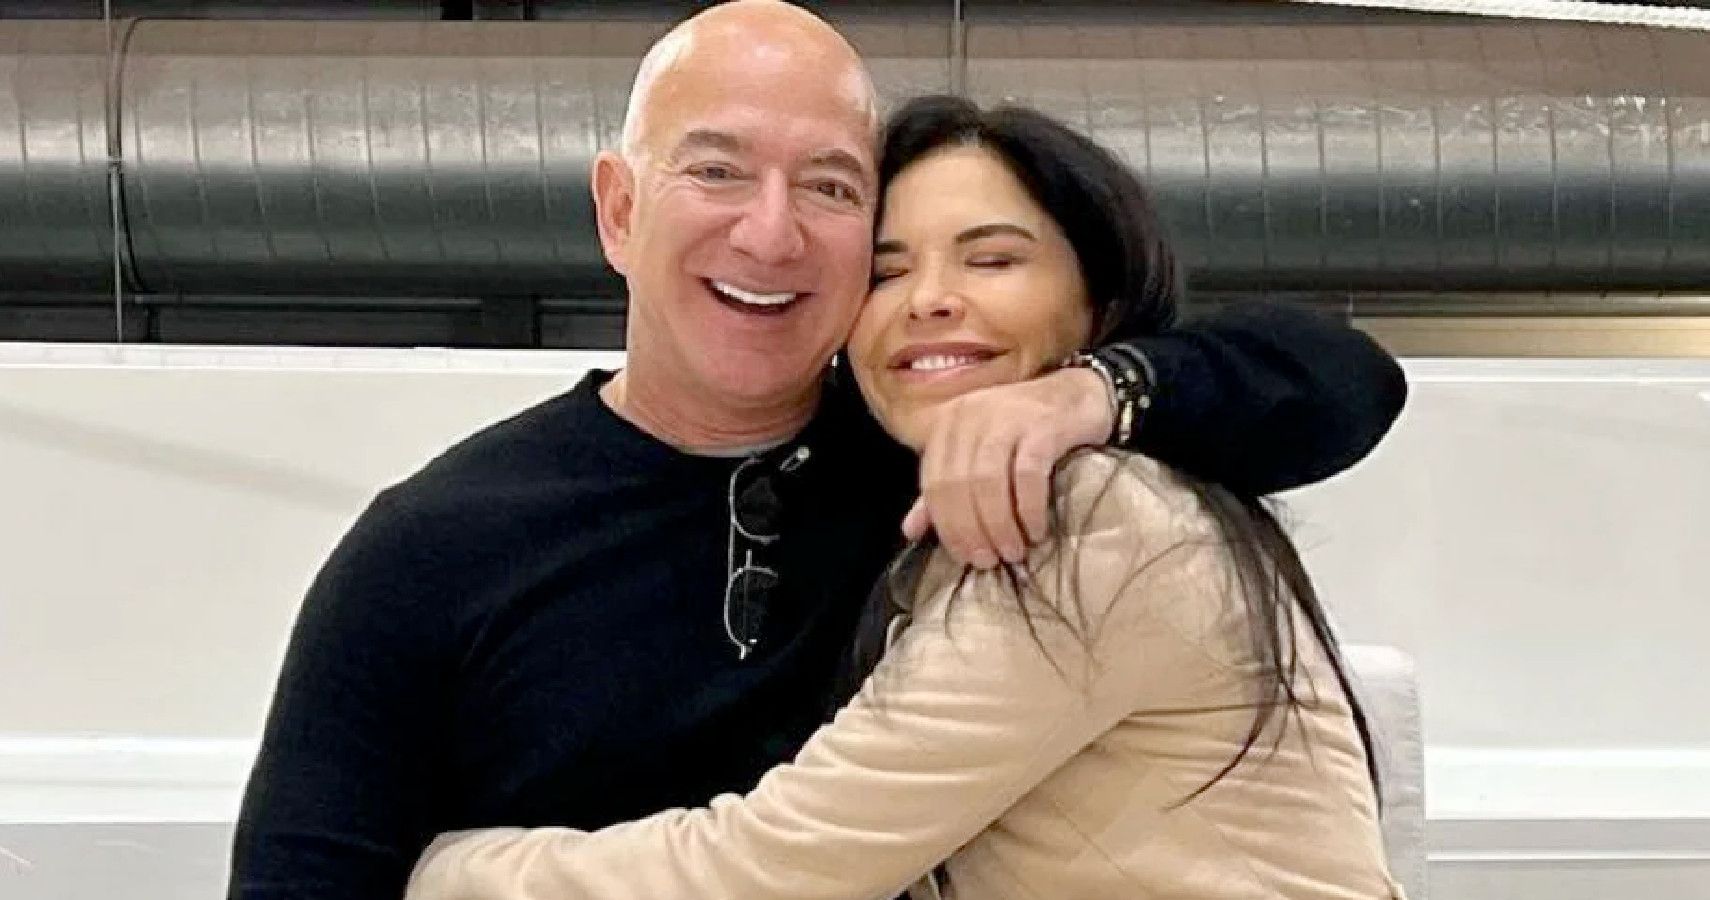 Jeff Bezos Proposes to Lauren Sanchez With 20-Carat Diamond Ring